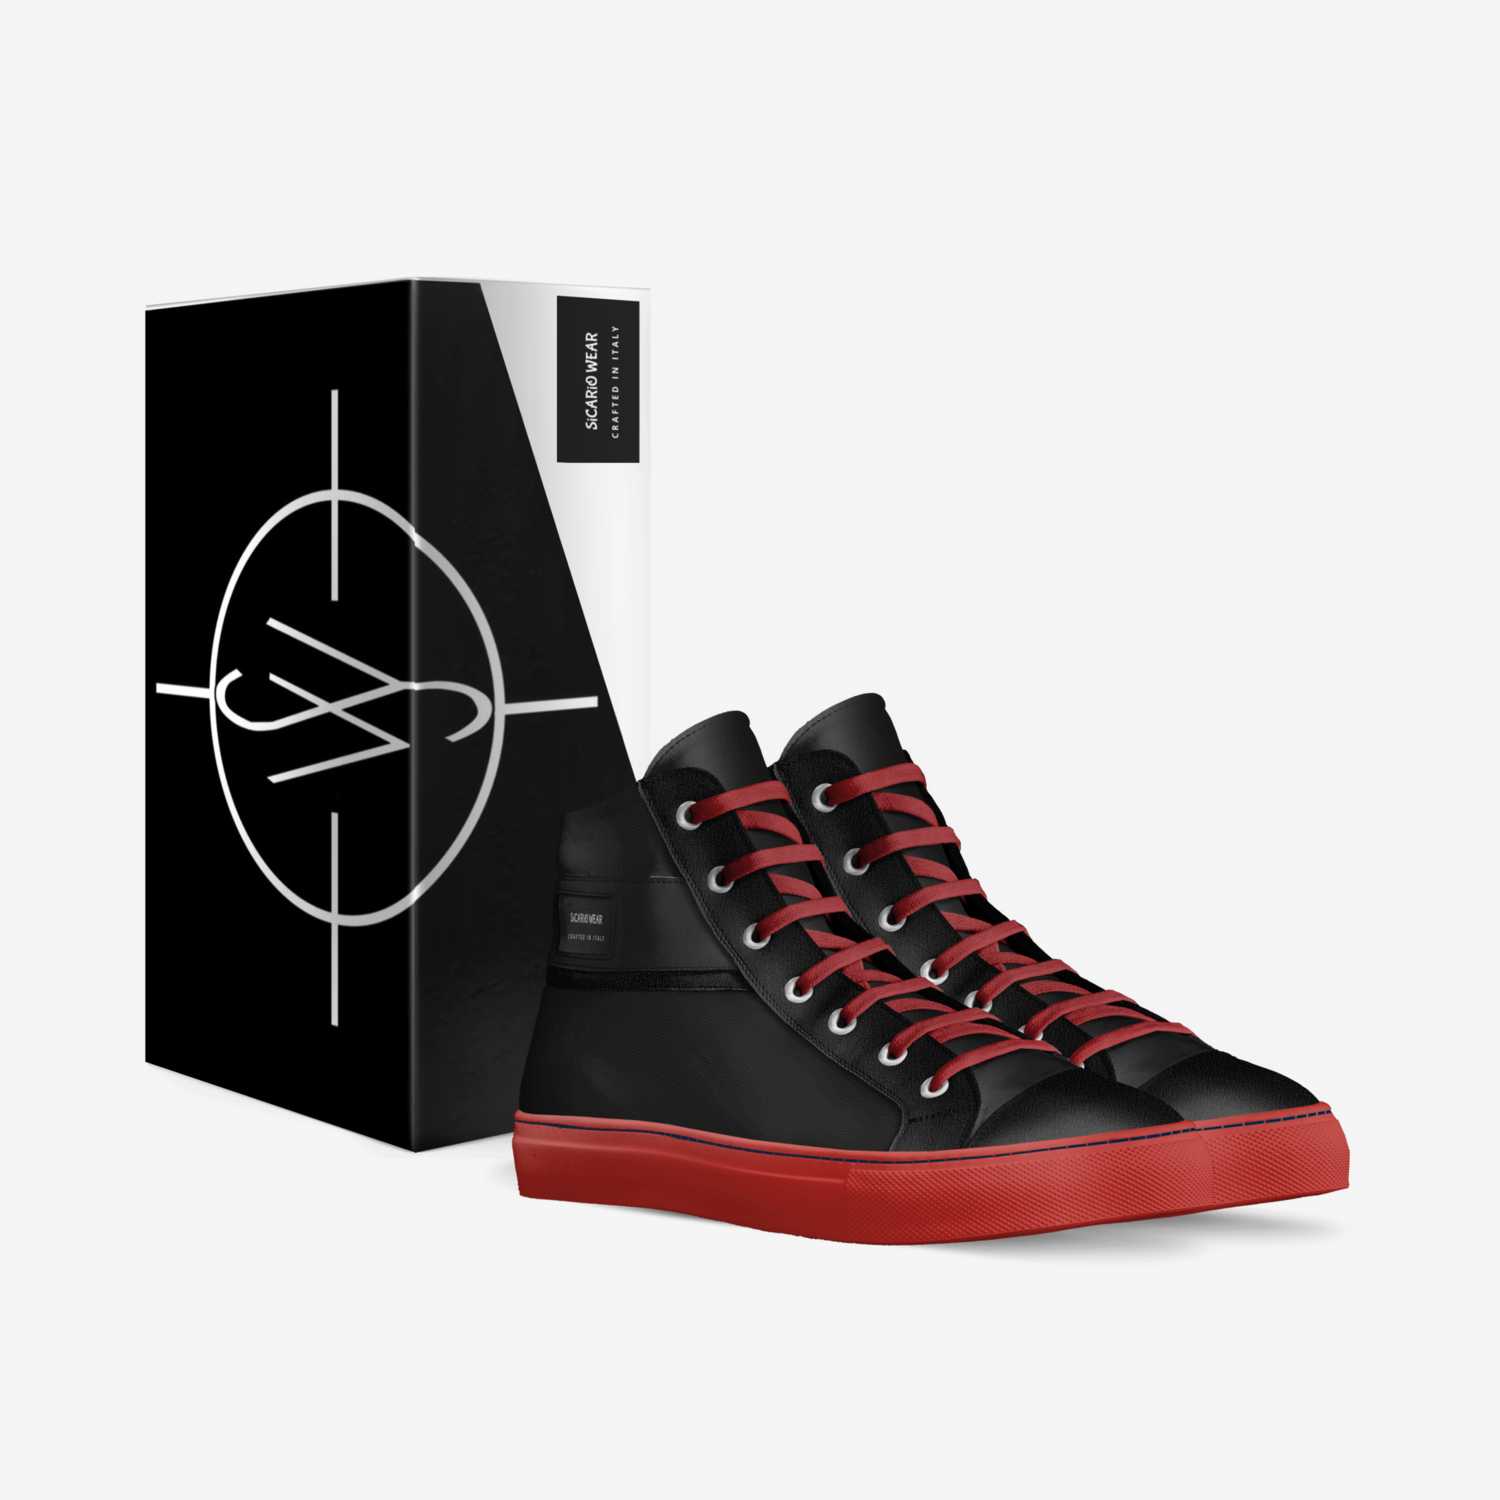 SiCARiO WEAR custom made in Italy shoes by Fernando Echevarria | Box view